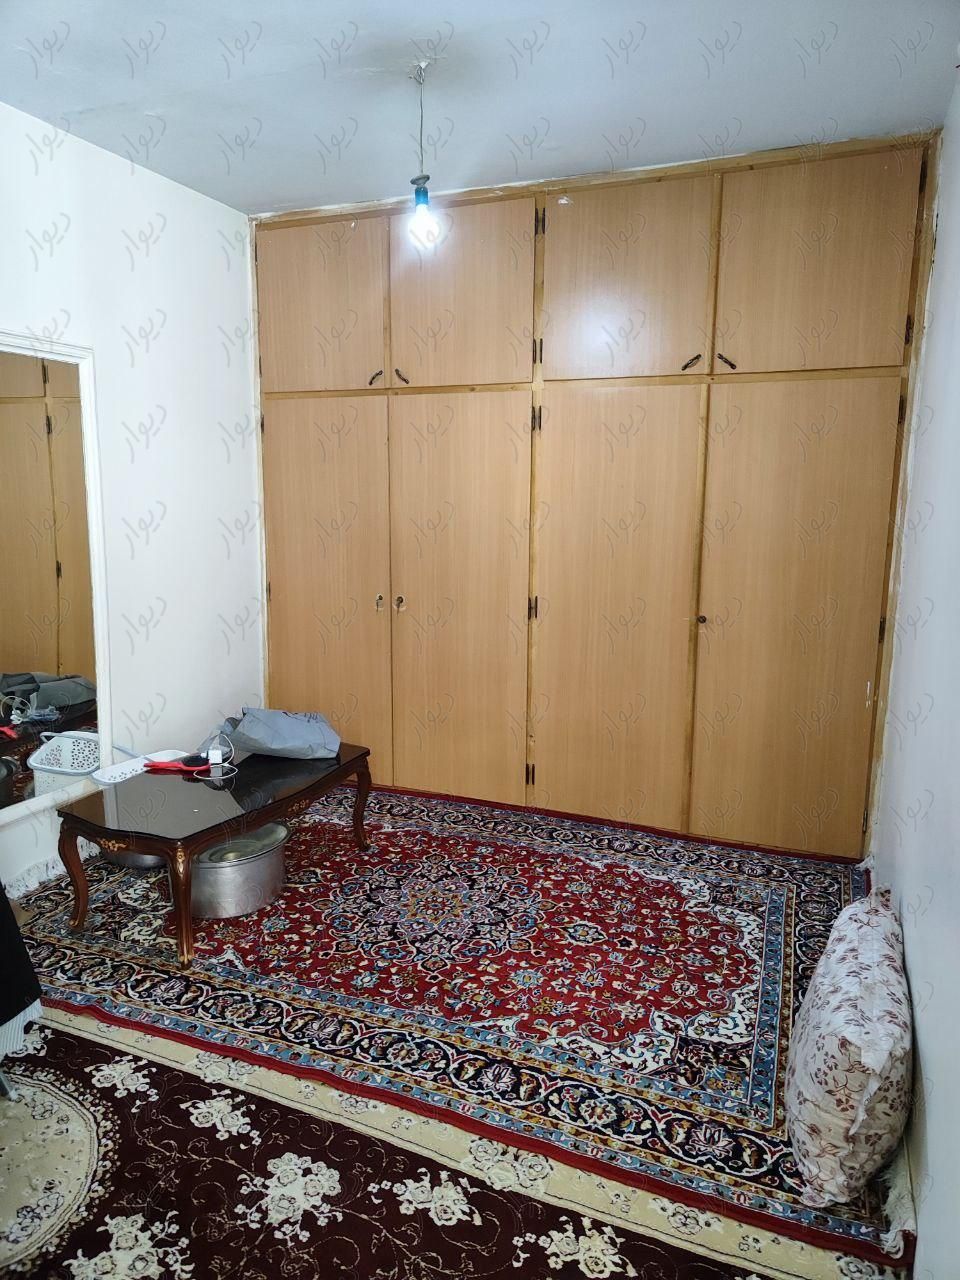 خونه ویلایی،۱۰۰متر تمیز ومرتب|فروش خانه و ویلا|مشهد, شهید آوینی|دیوار